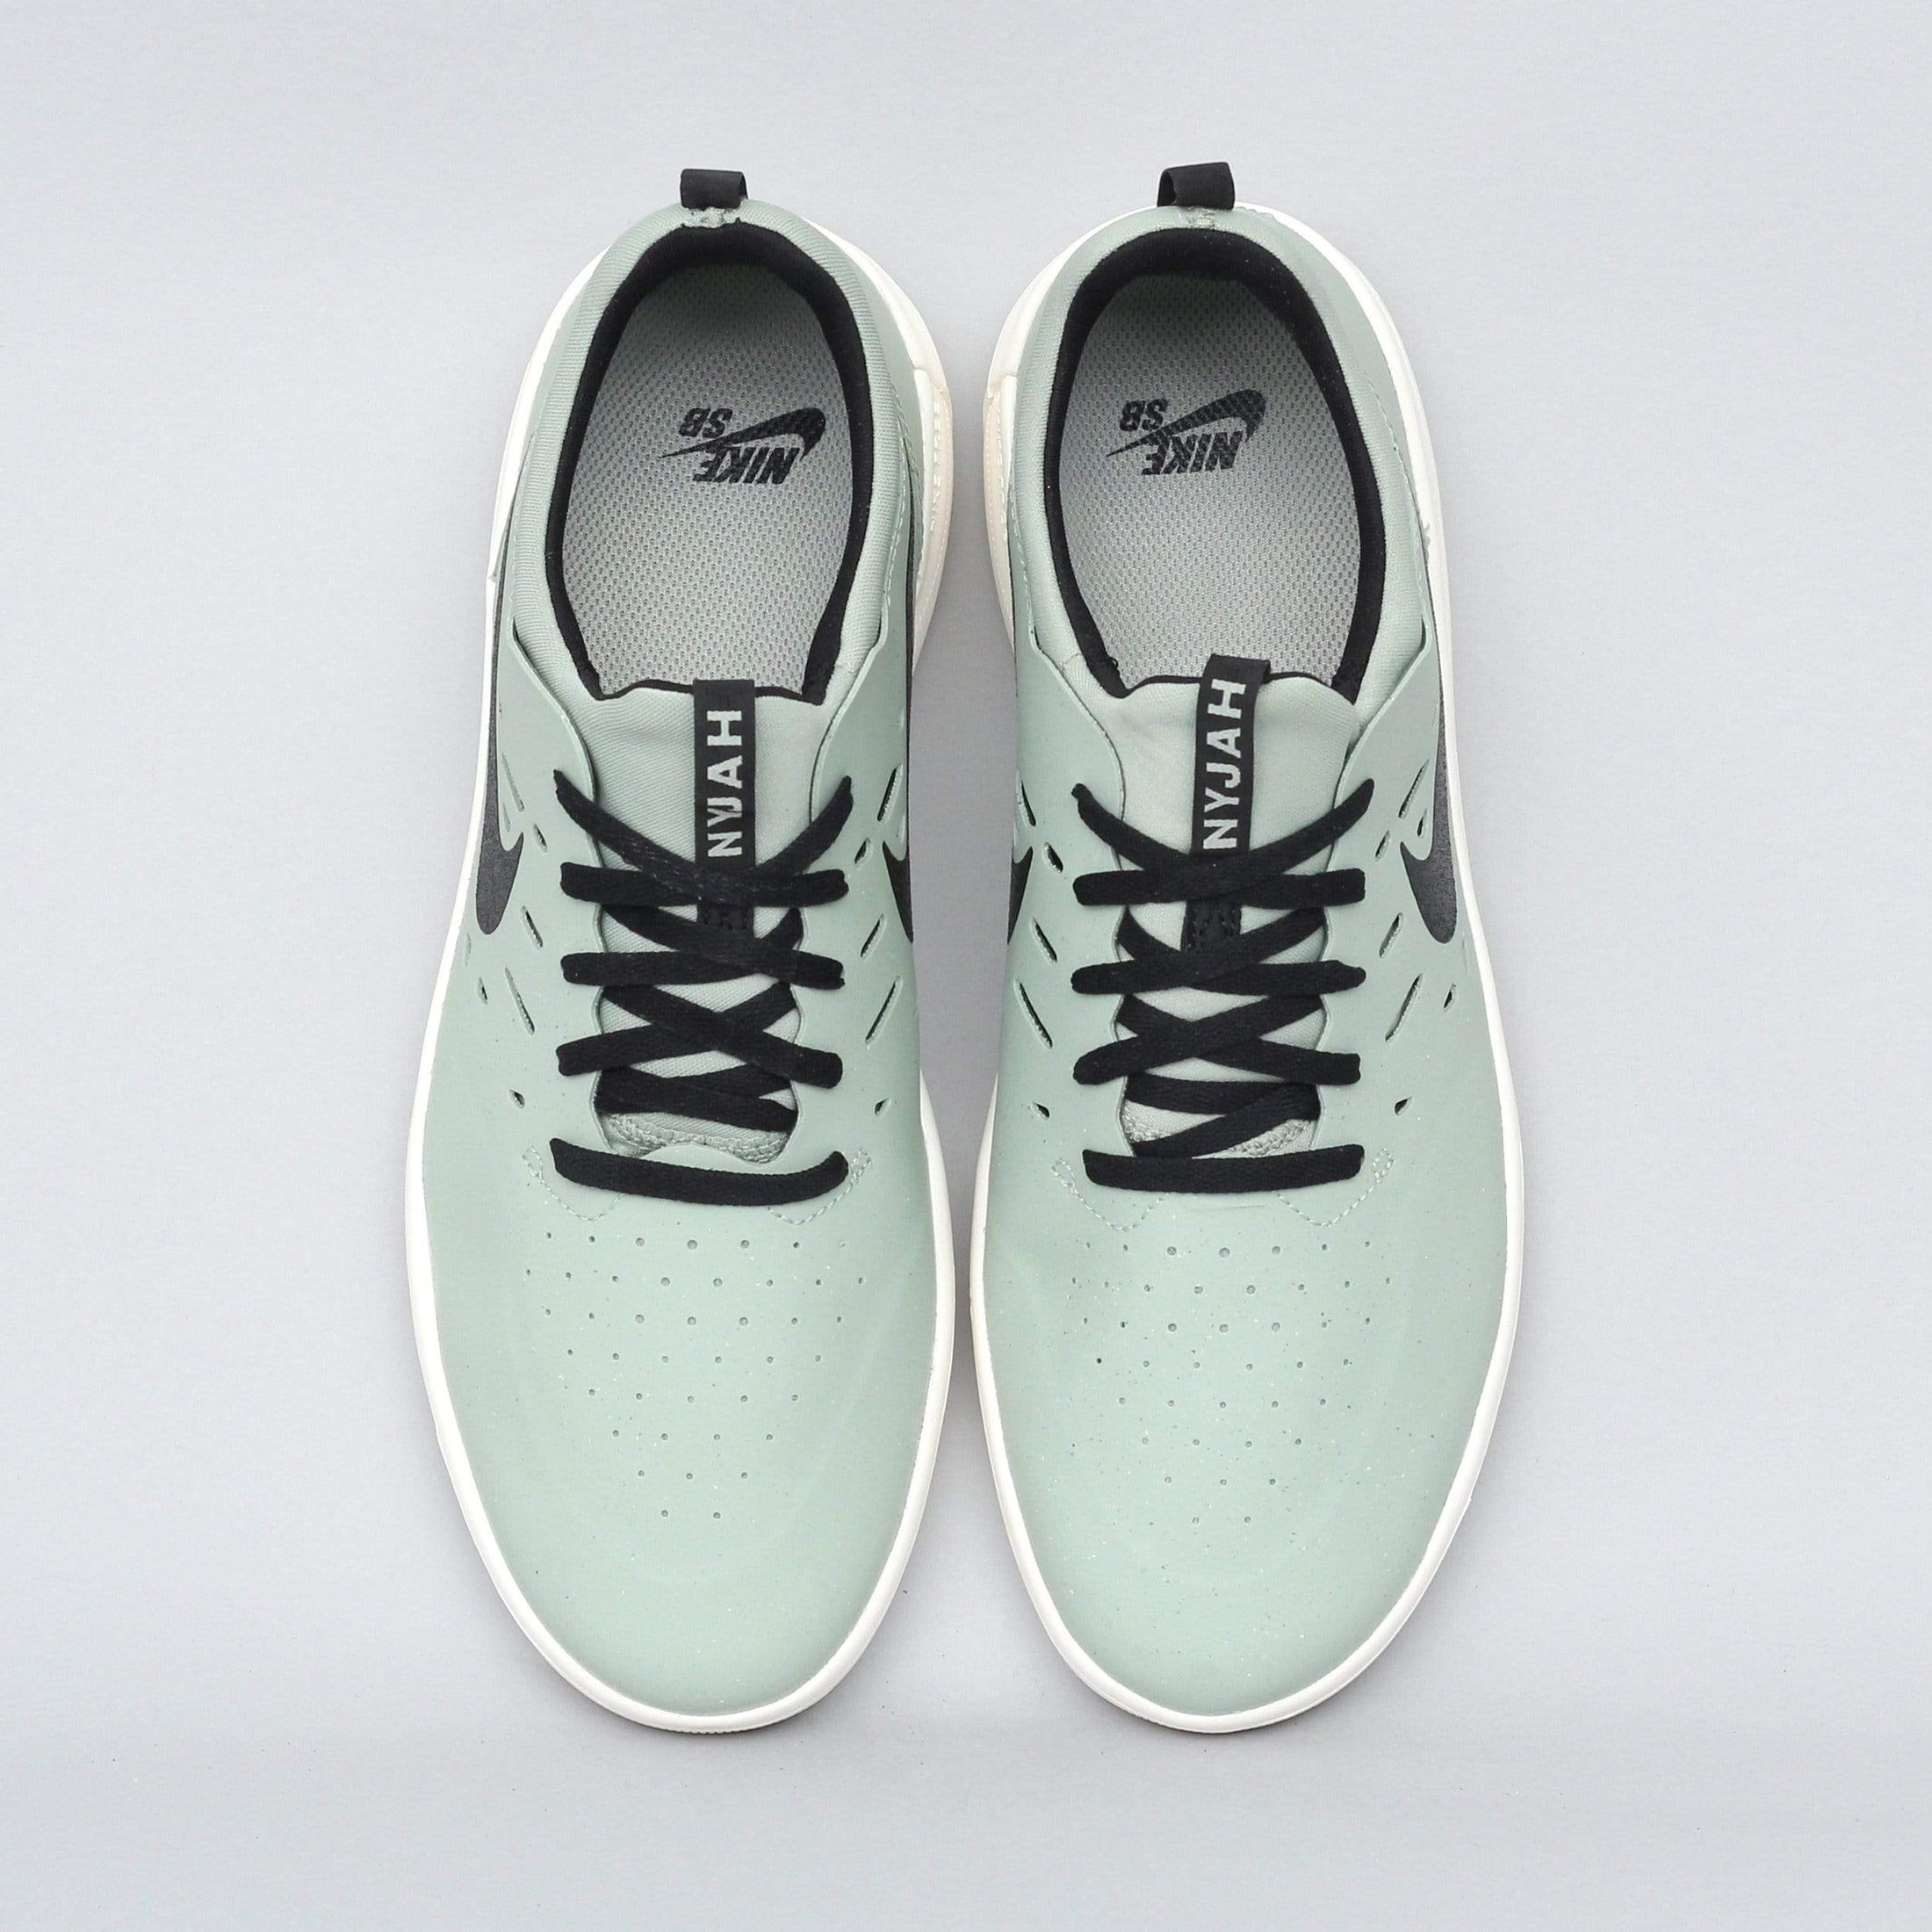 Nike SB Nyjah Free Shoes Jade Horizon / Black - Jade Horizon